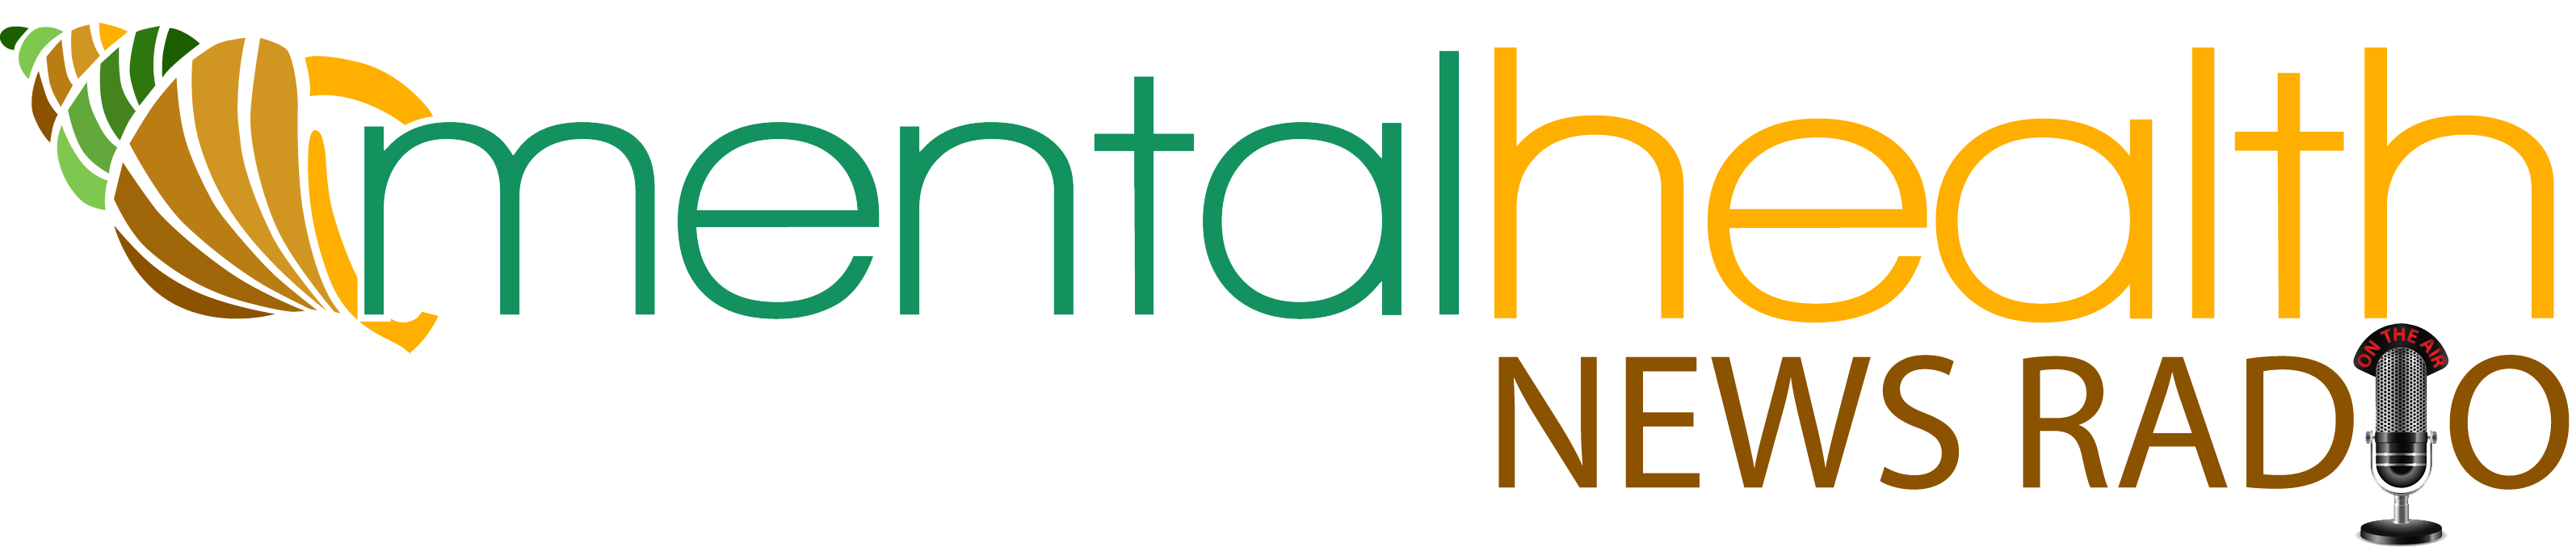 Mental Health News Radio Network